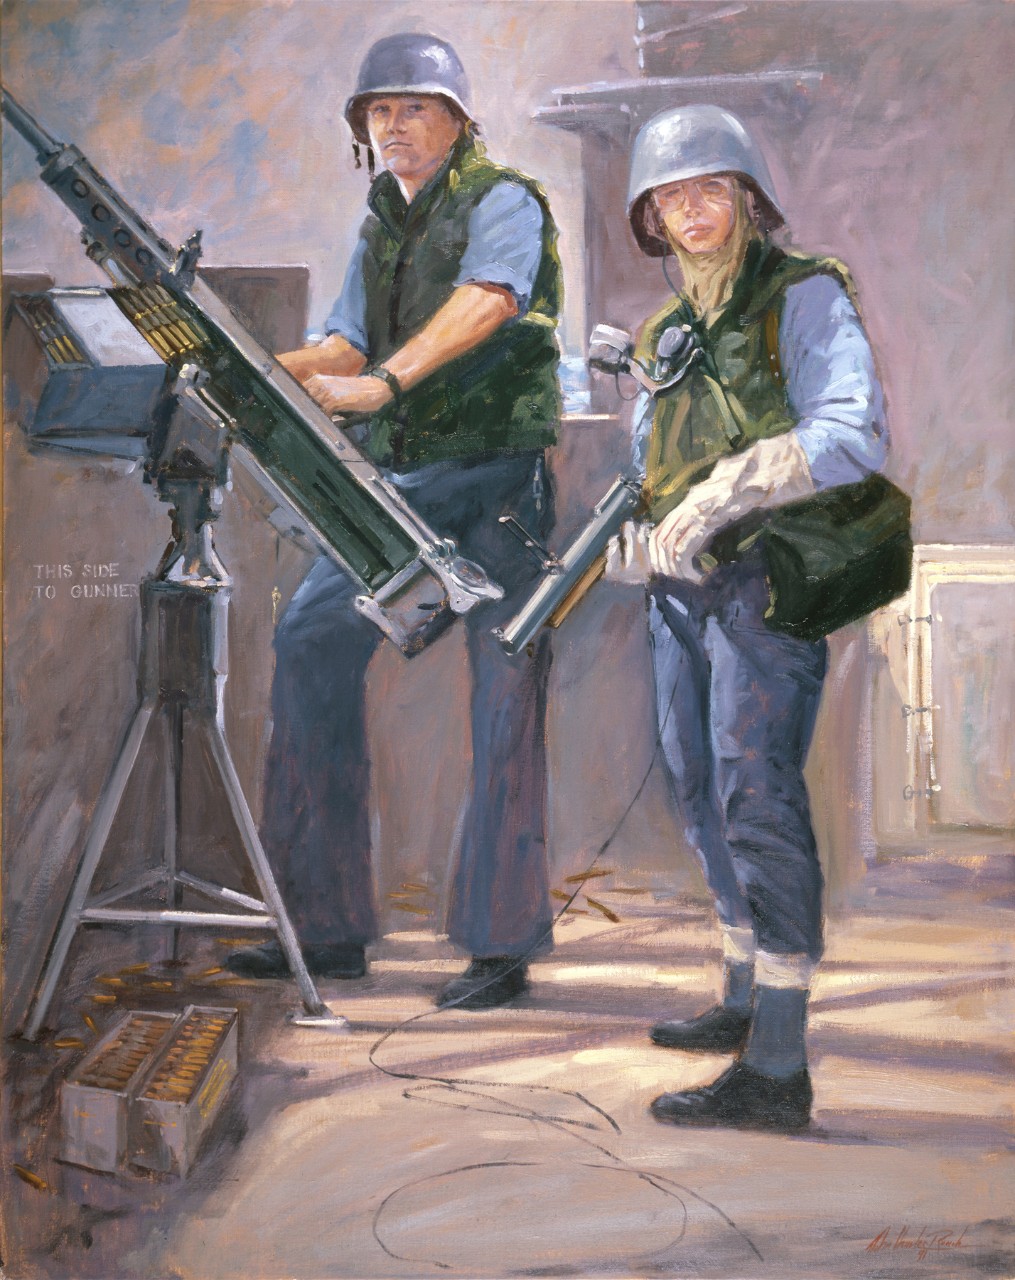 A man and a woman stand next to a 50-caliber gun